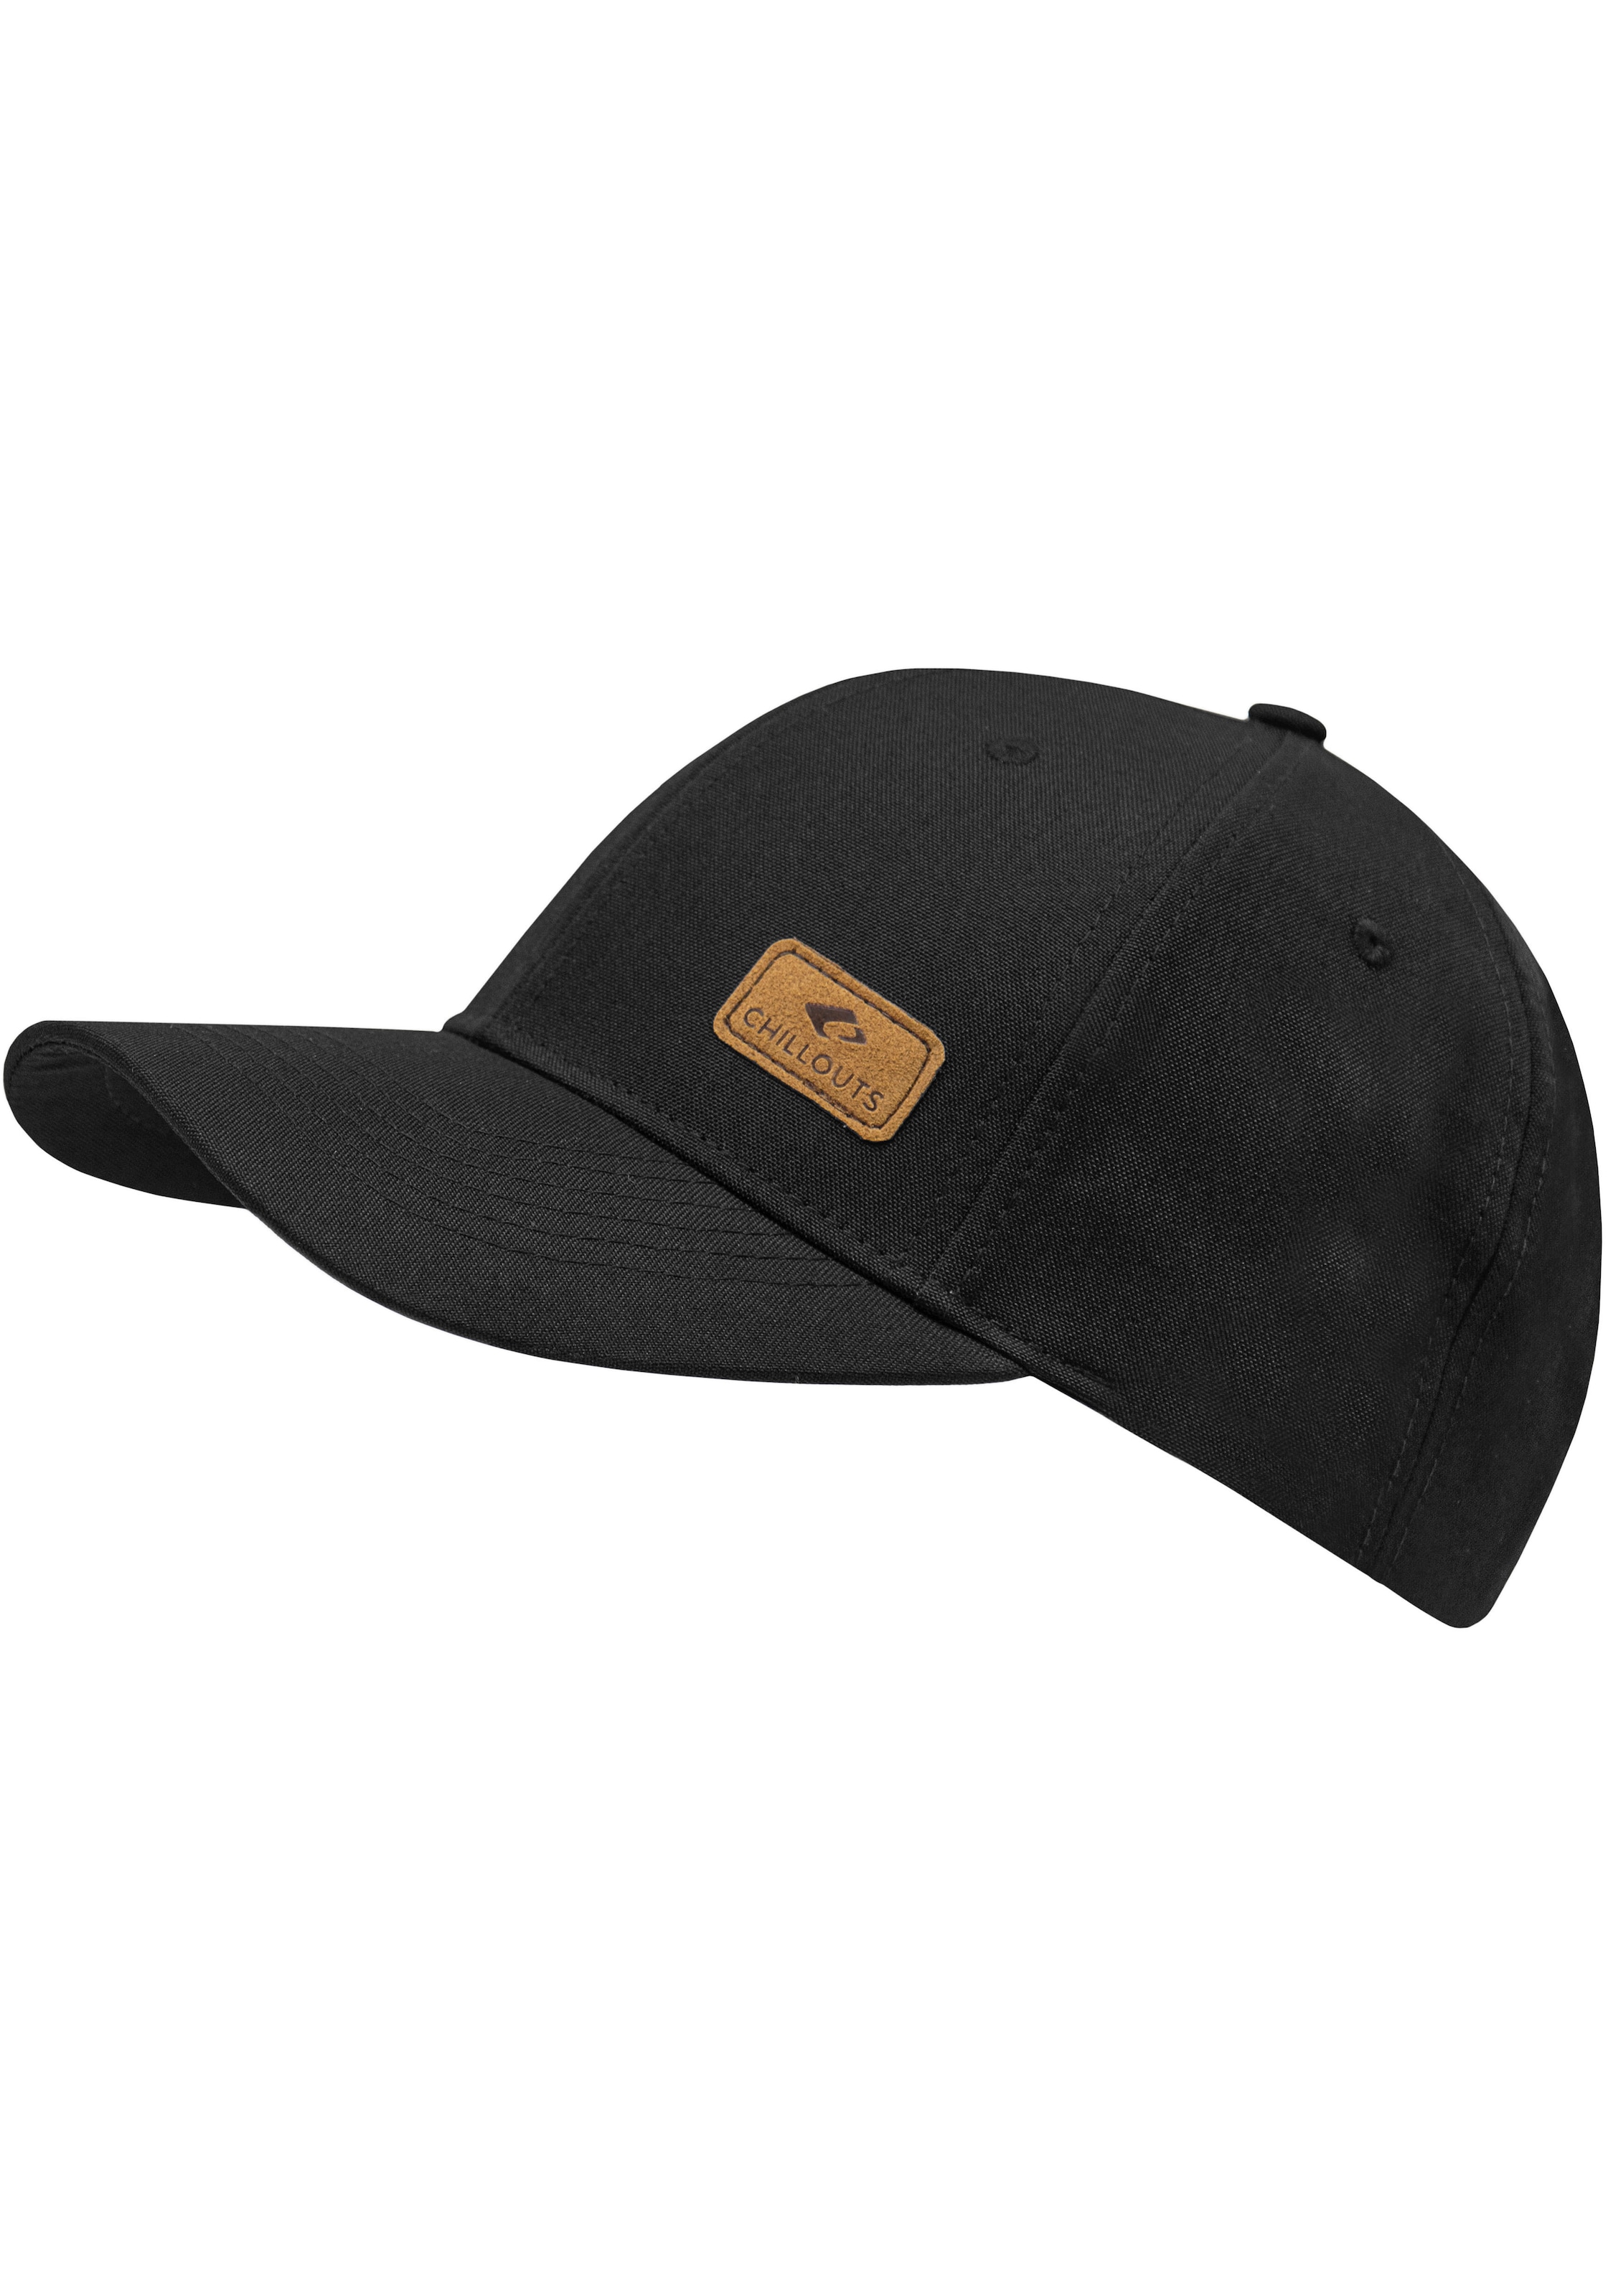 Baseball Cap, Amadora Hat in melierter Optik, One Size, verstellbar